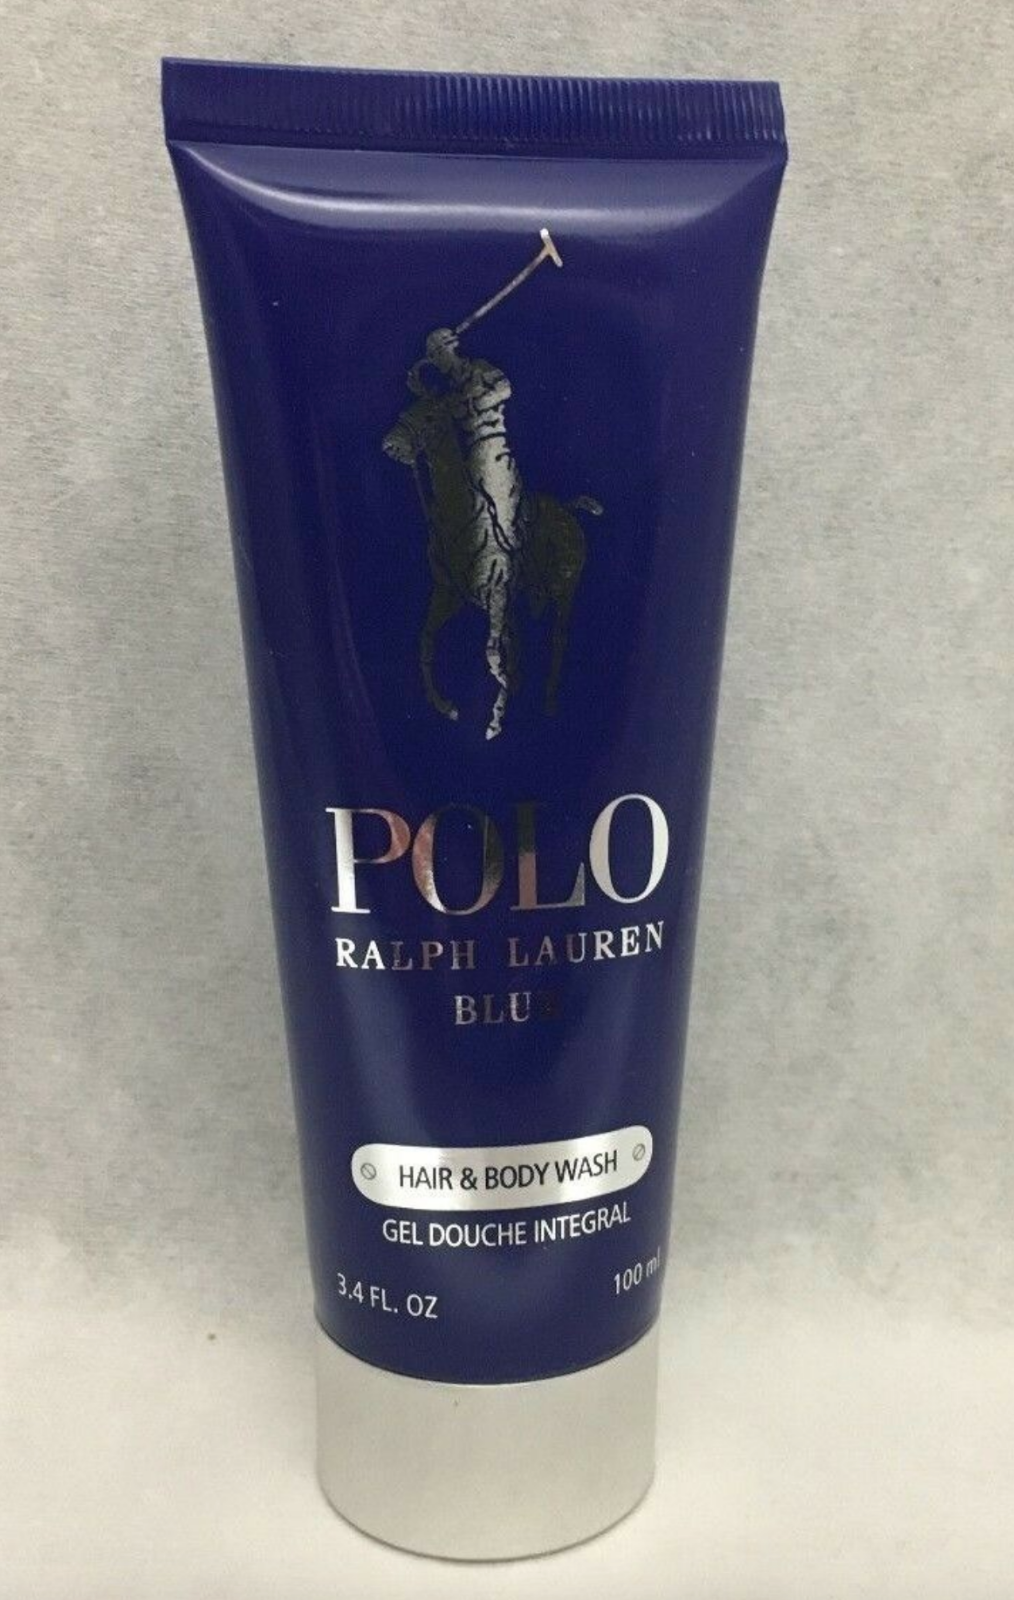 POLO Ralph Lauren Blue EDP Spray, Hair&Body Wash, Deodorant, OR FULL ...